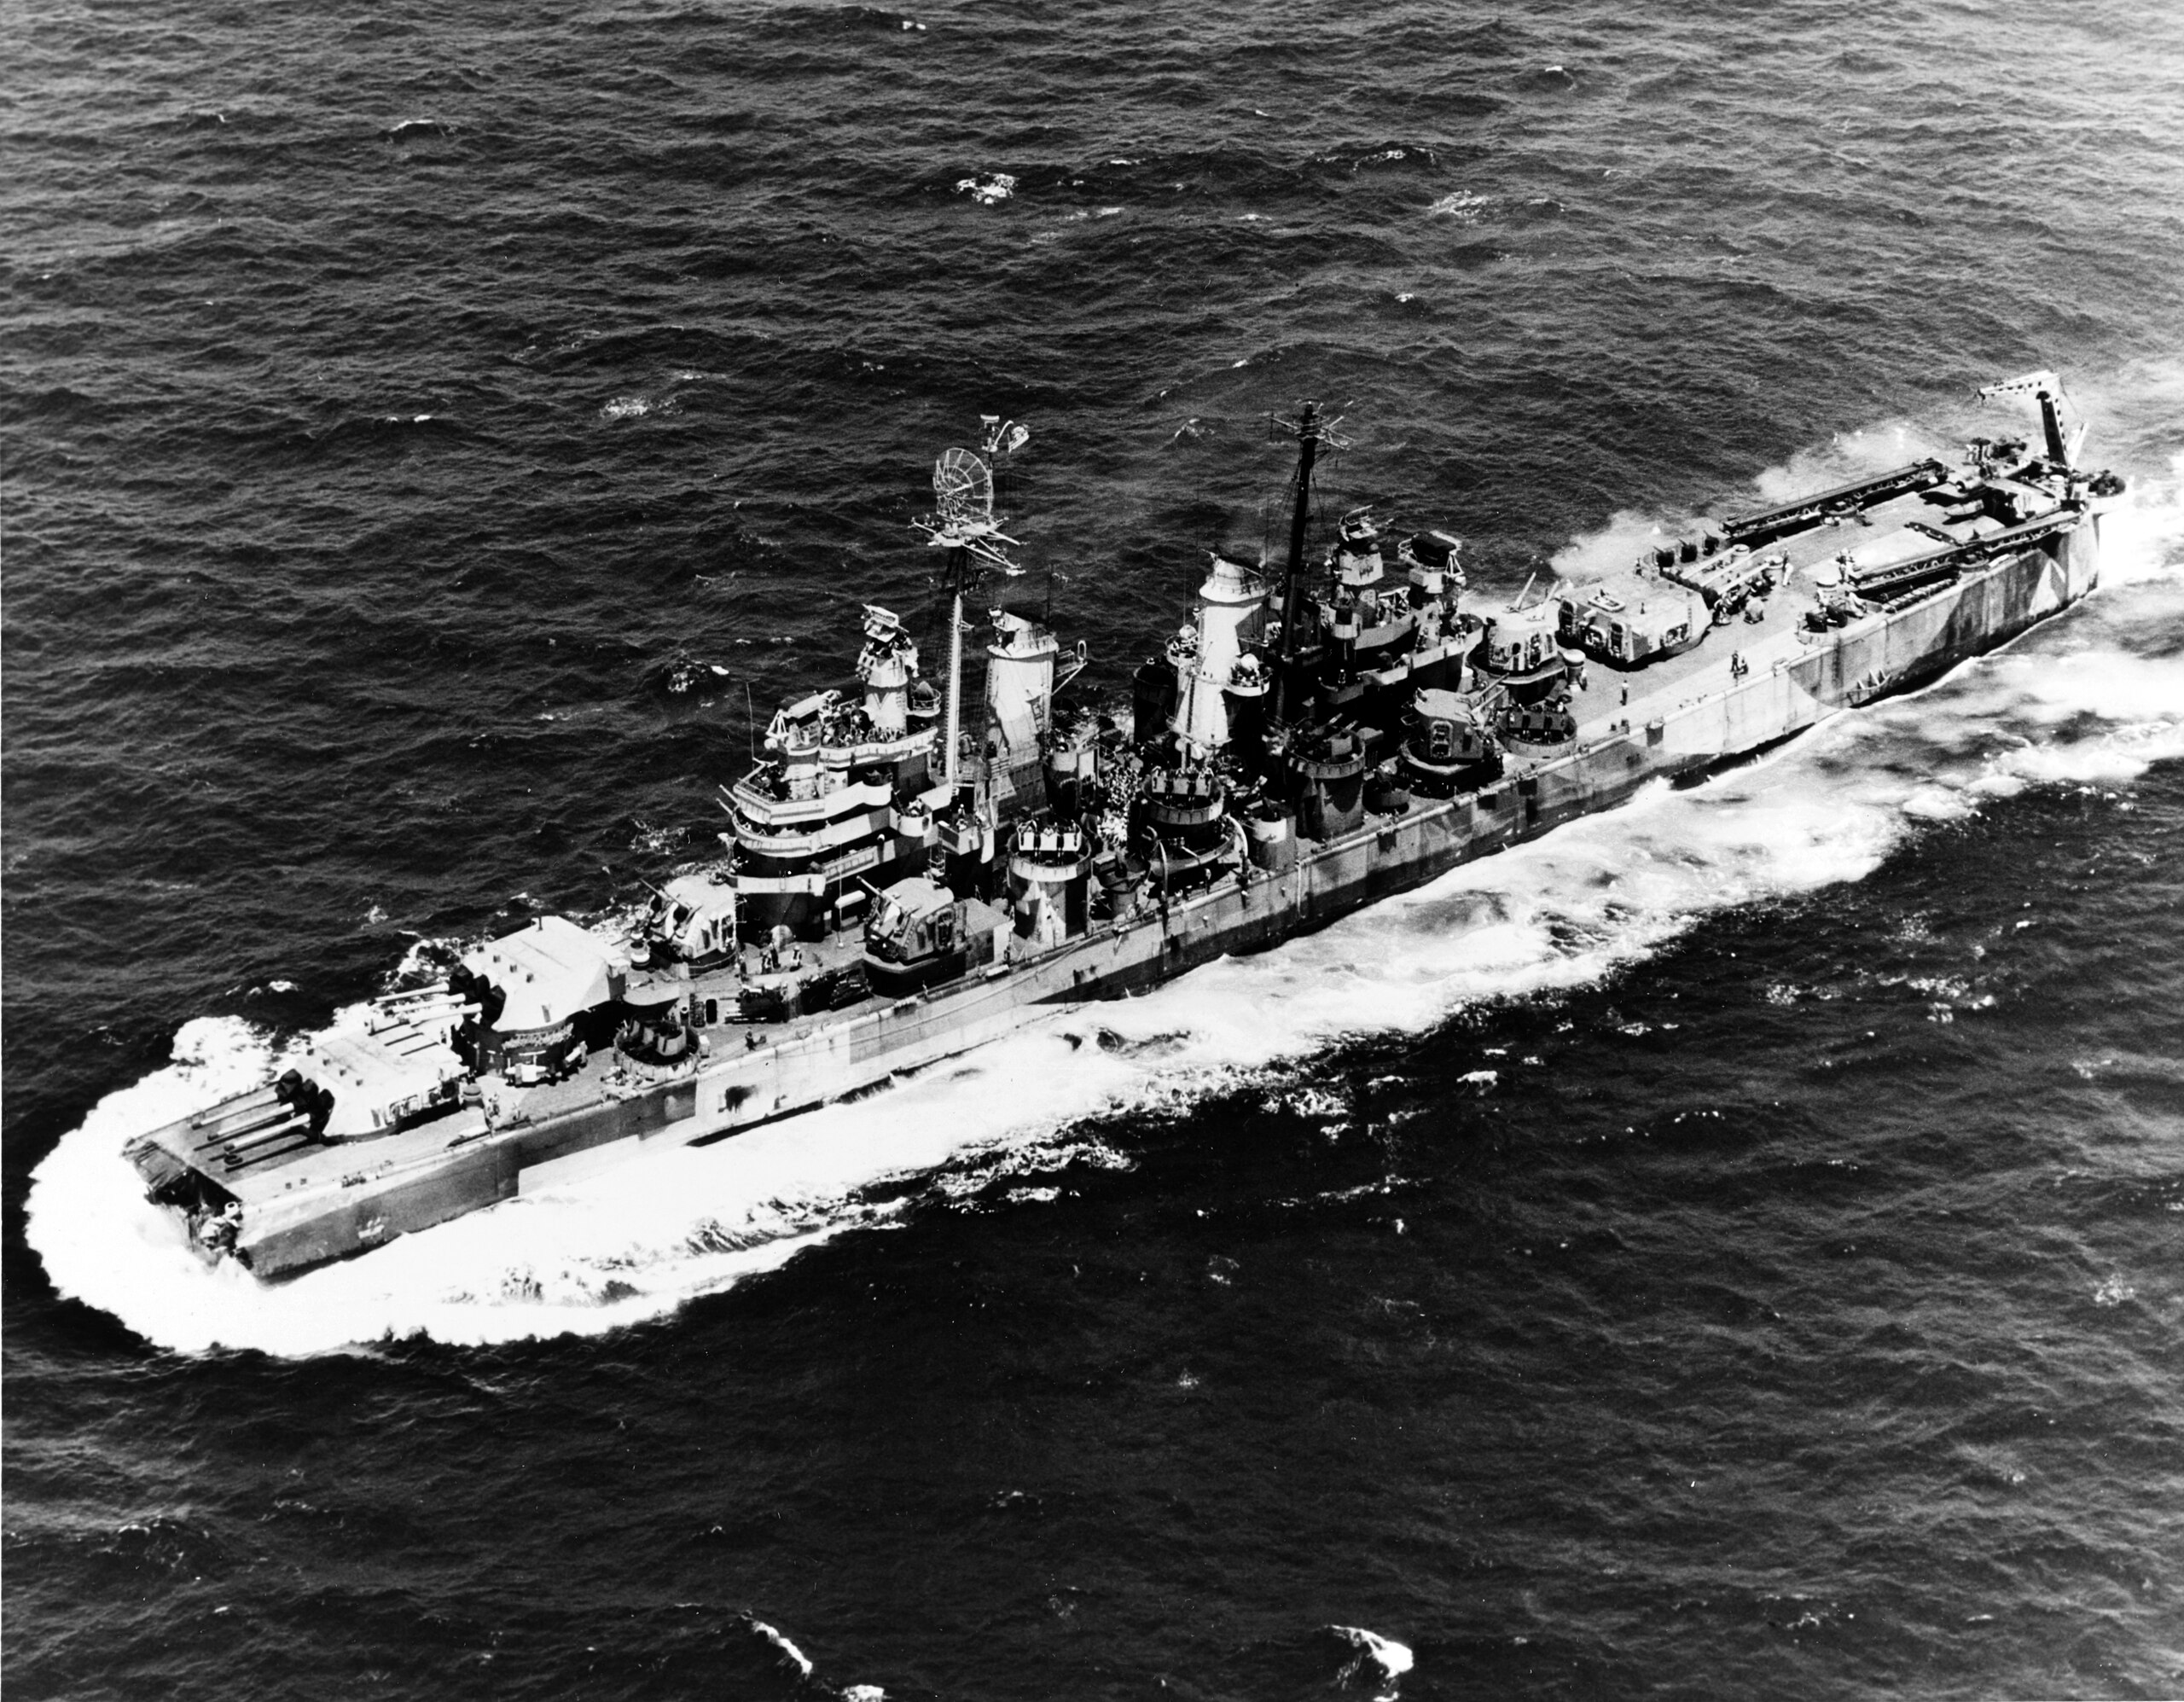 https://upload.wikimedia.org/wikipedia/commons/thumb/b/b0/USS_Pittsburgh_%28CA-72%29_underway_after_she_lost_her_bow_in_June_1945_%2880-G-325746%29.jpg/2560px-USS_Pittsburgh_%28CA-72%29_underway_after_she_lost_her_bow_in_June_1945_%2880-G-325746%29.jpg